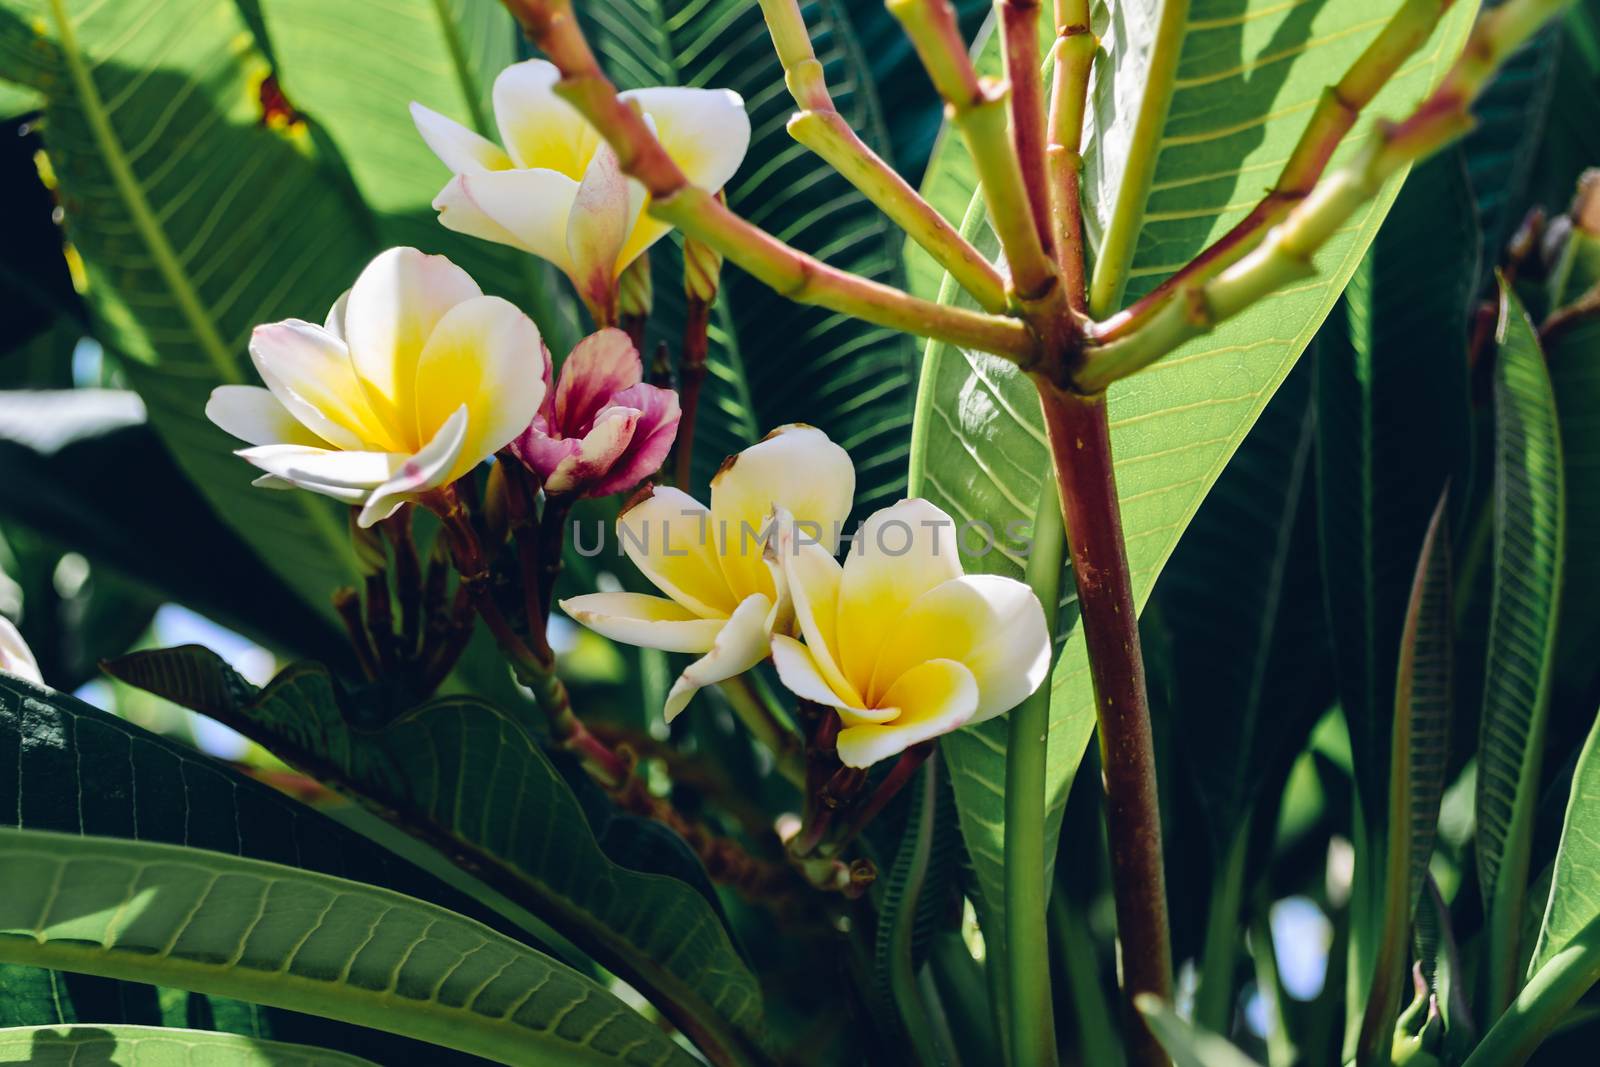 White frangipani flowers by Seva_blsv